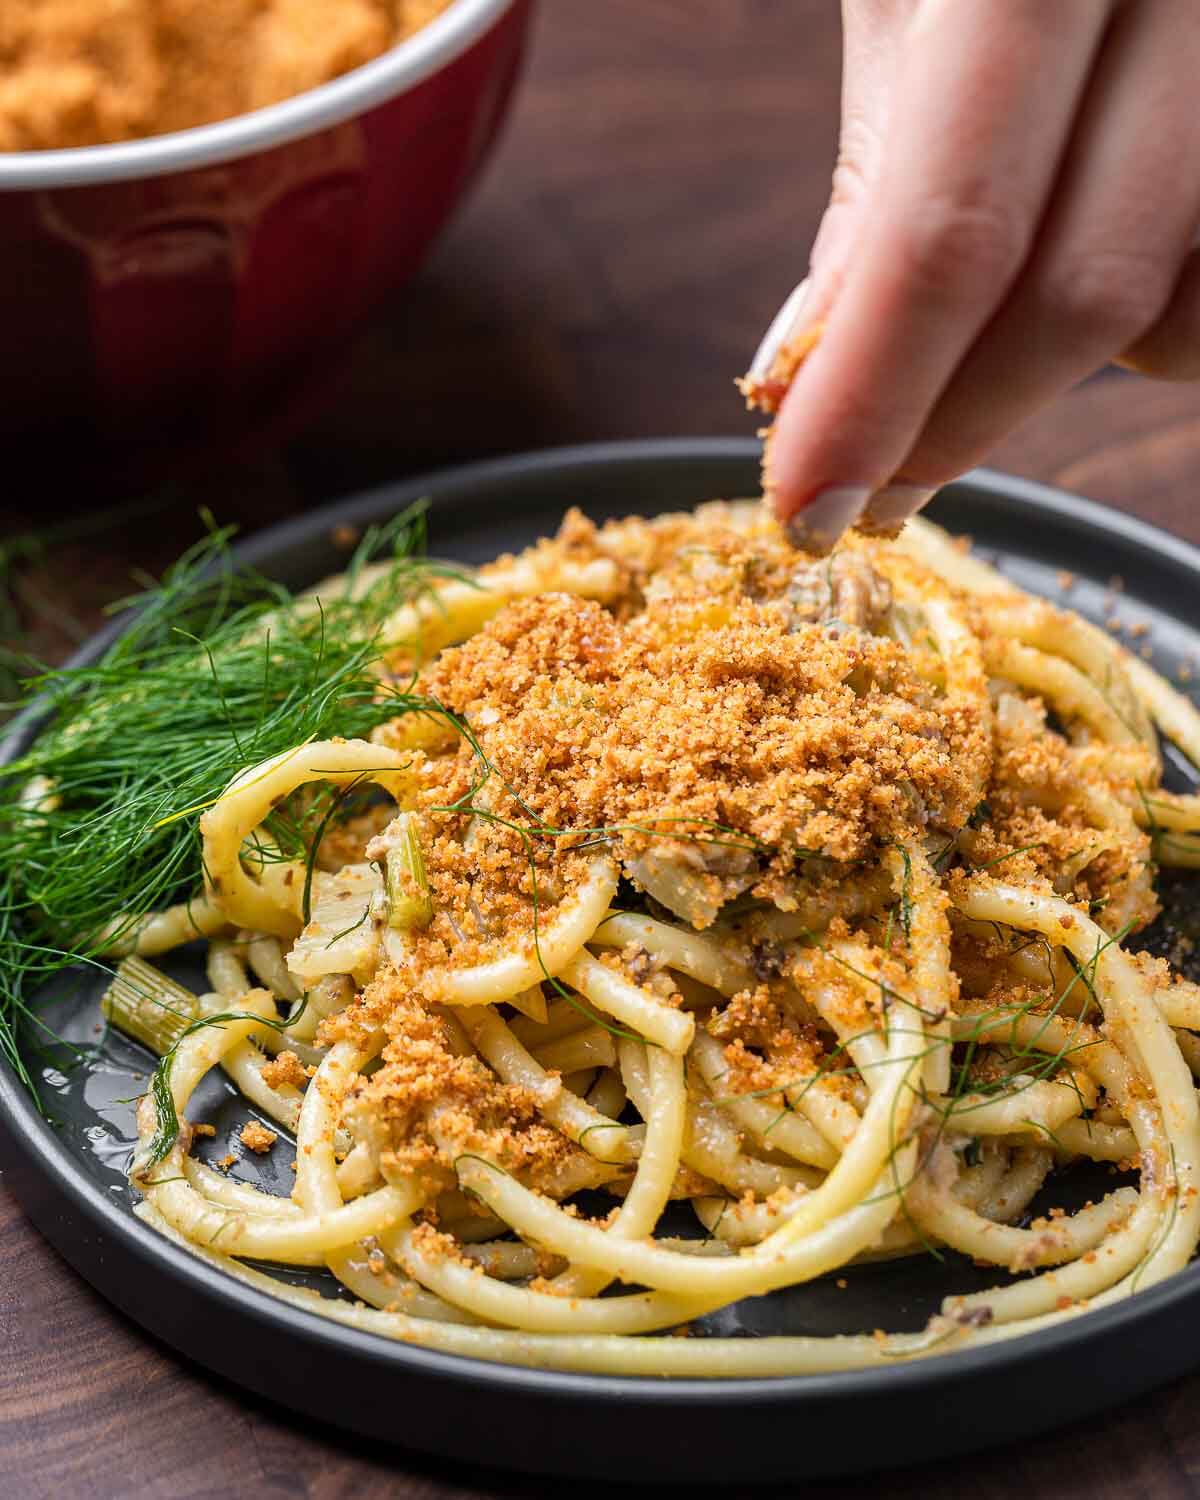 Hands sprinkling breadcrumbs on top of plate of pasta.